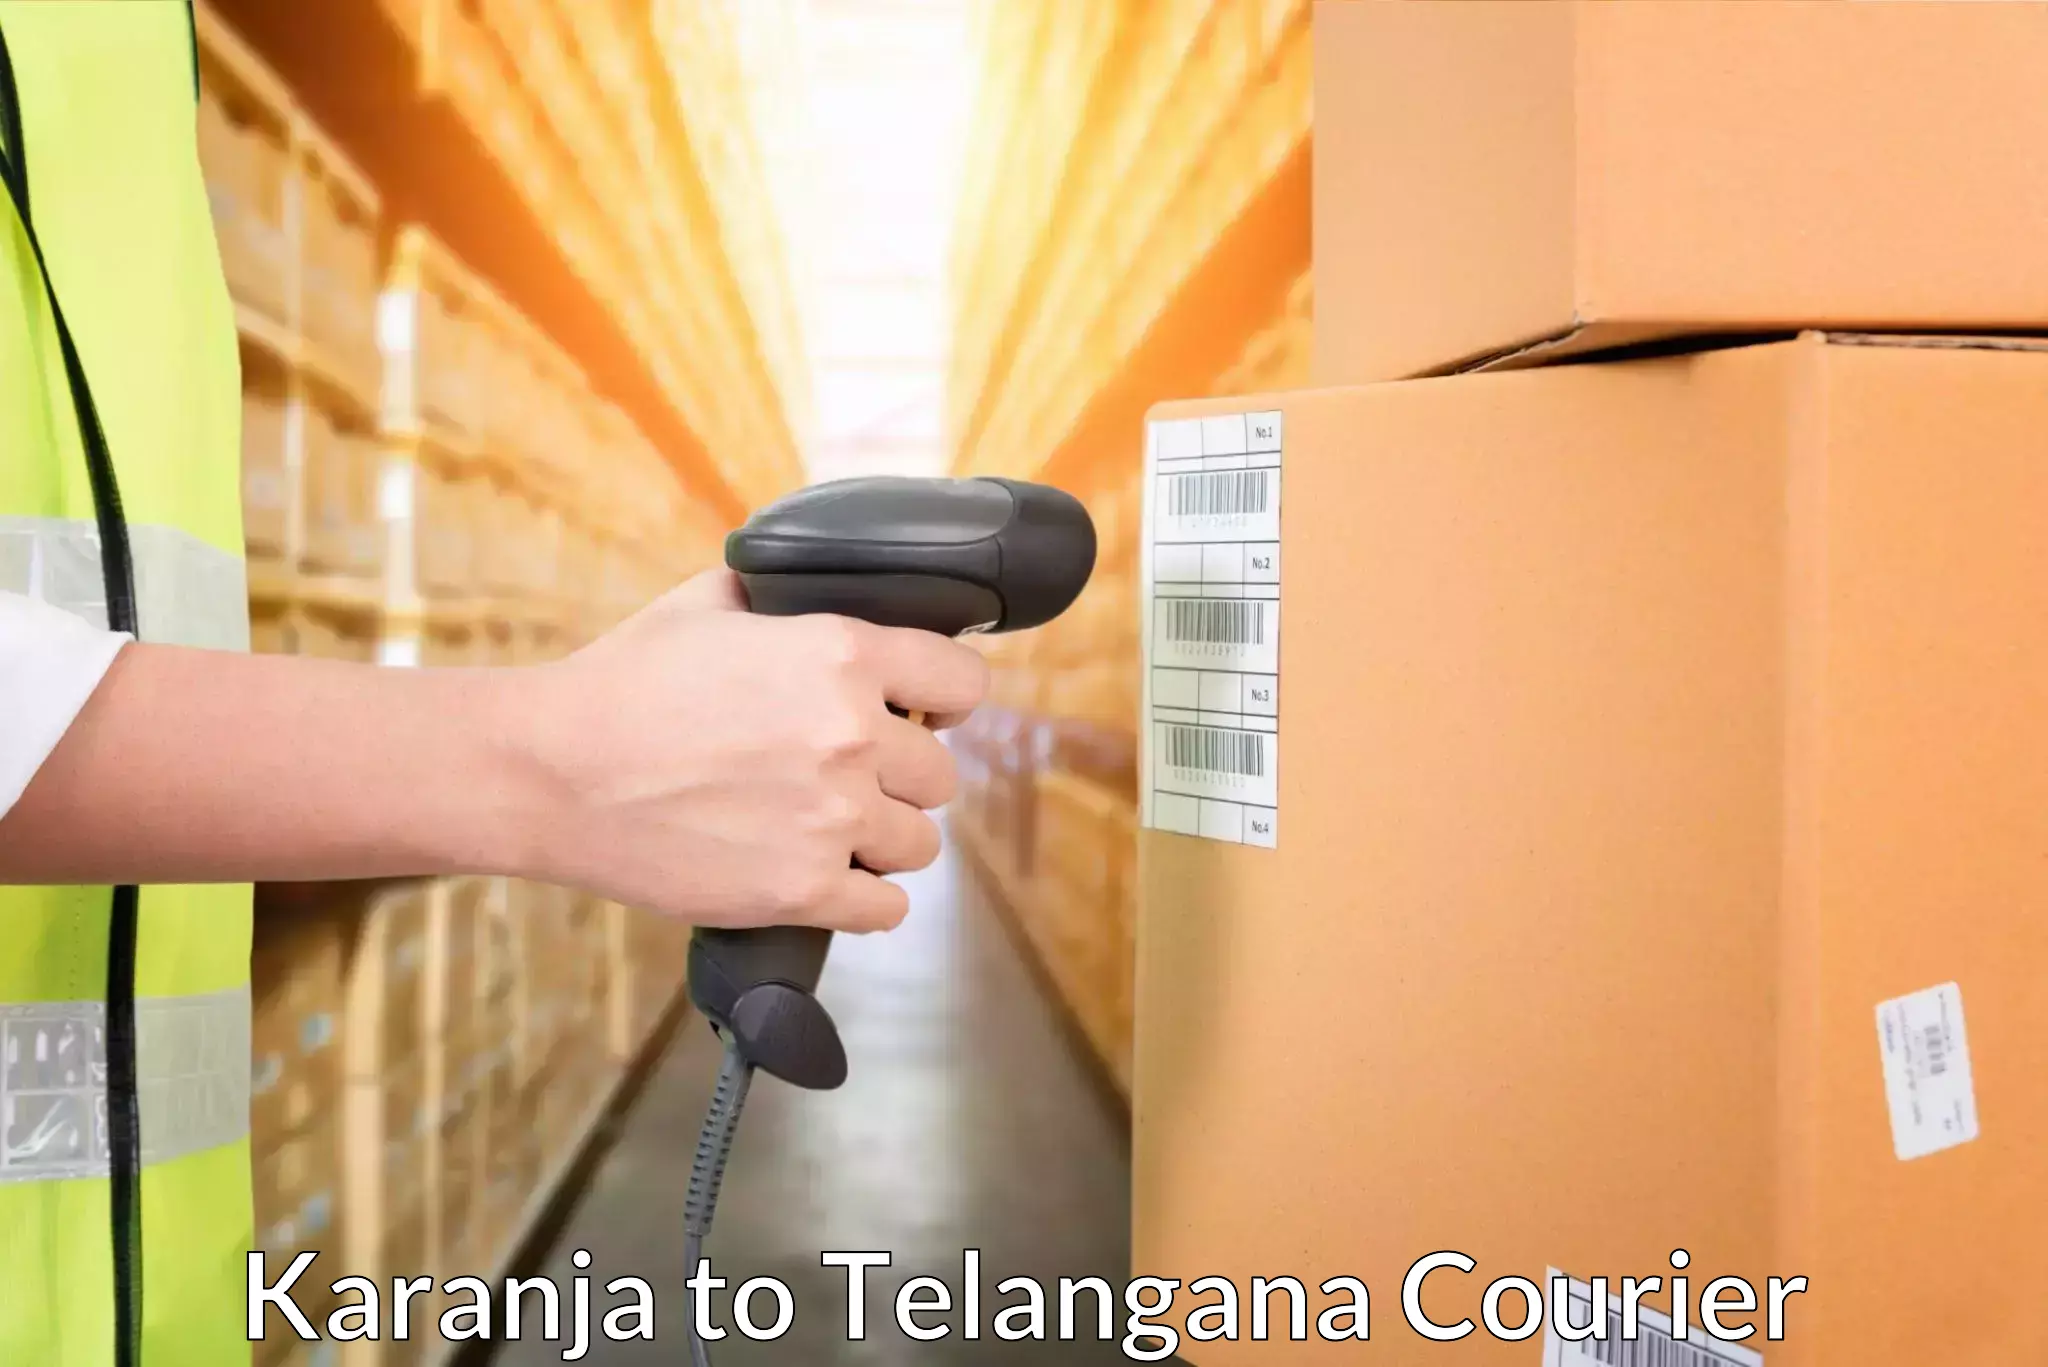 Bulk shipping discounts in Karanja to Sircilla